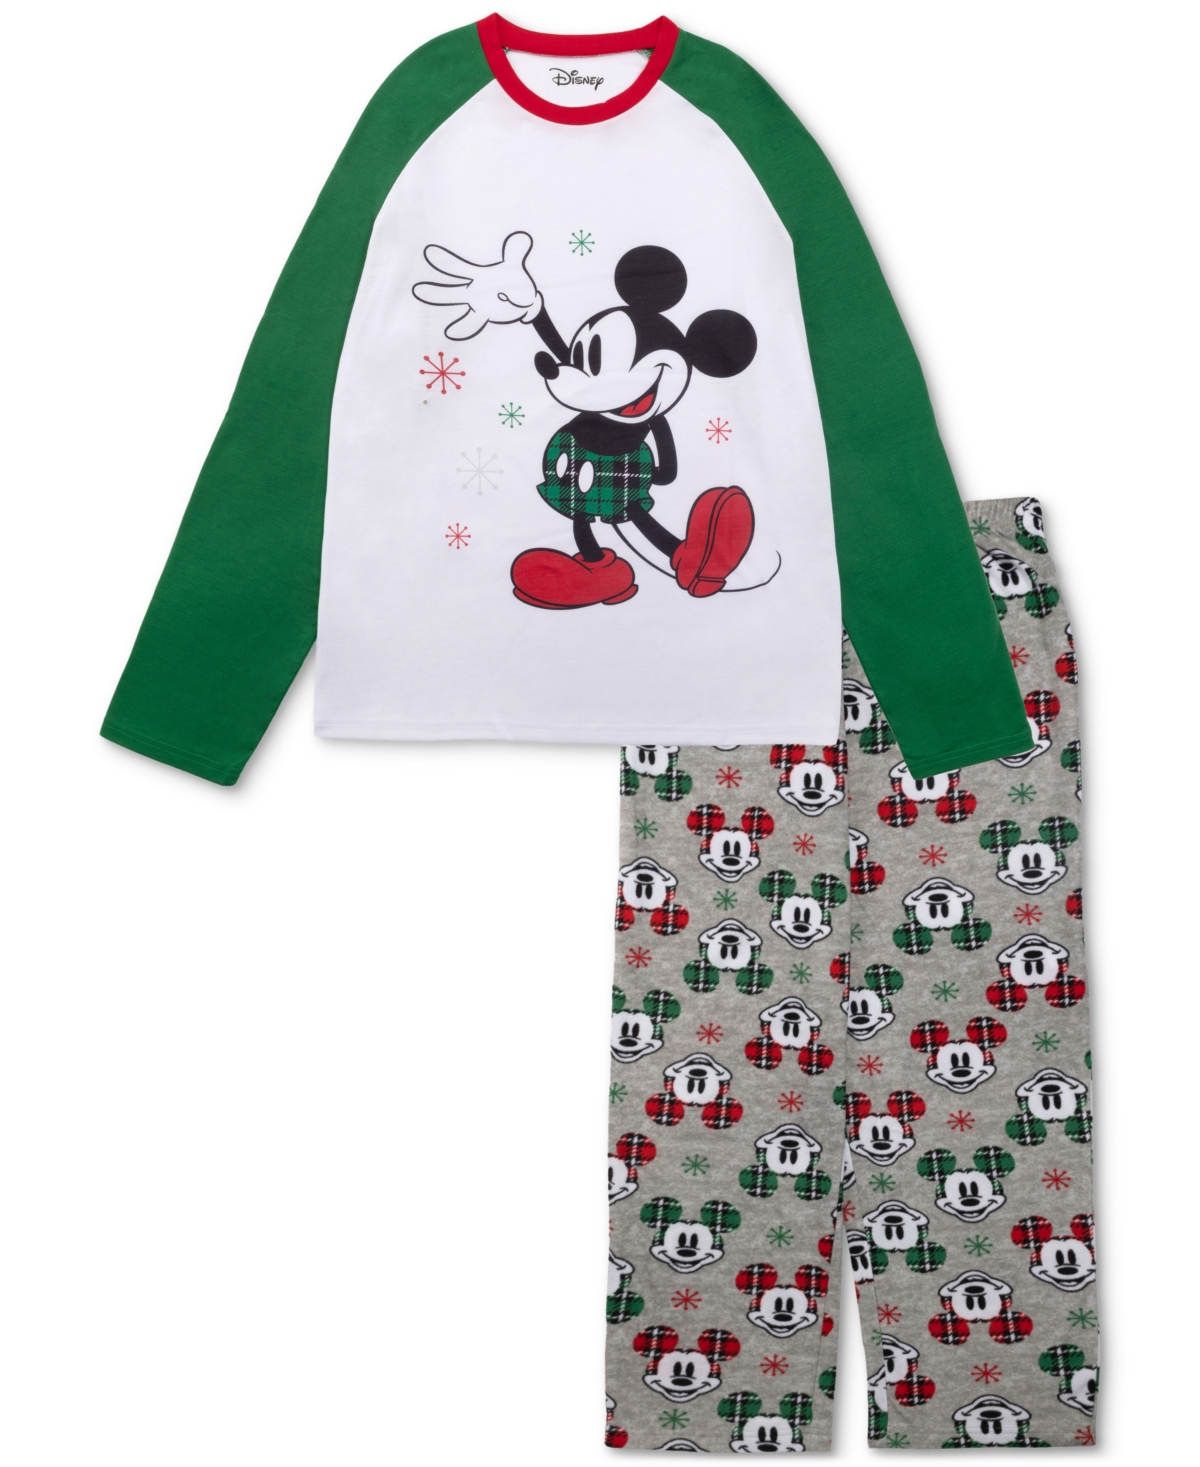 Matching Women's Mickey Mouse Pajamas Set - Green